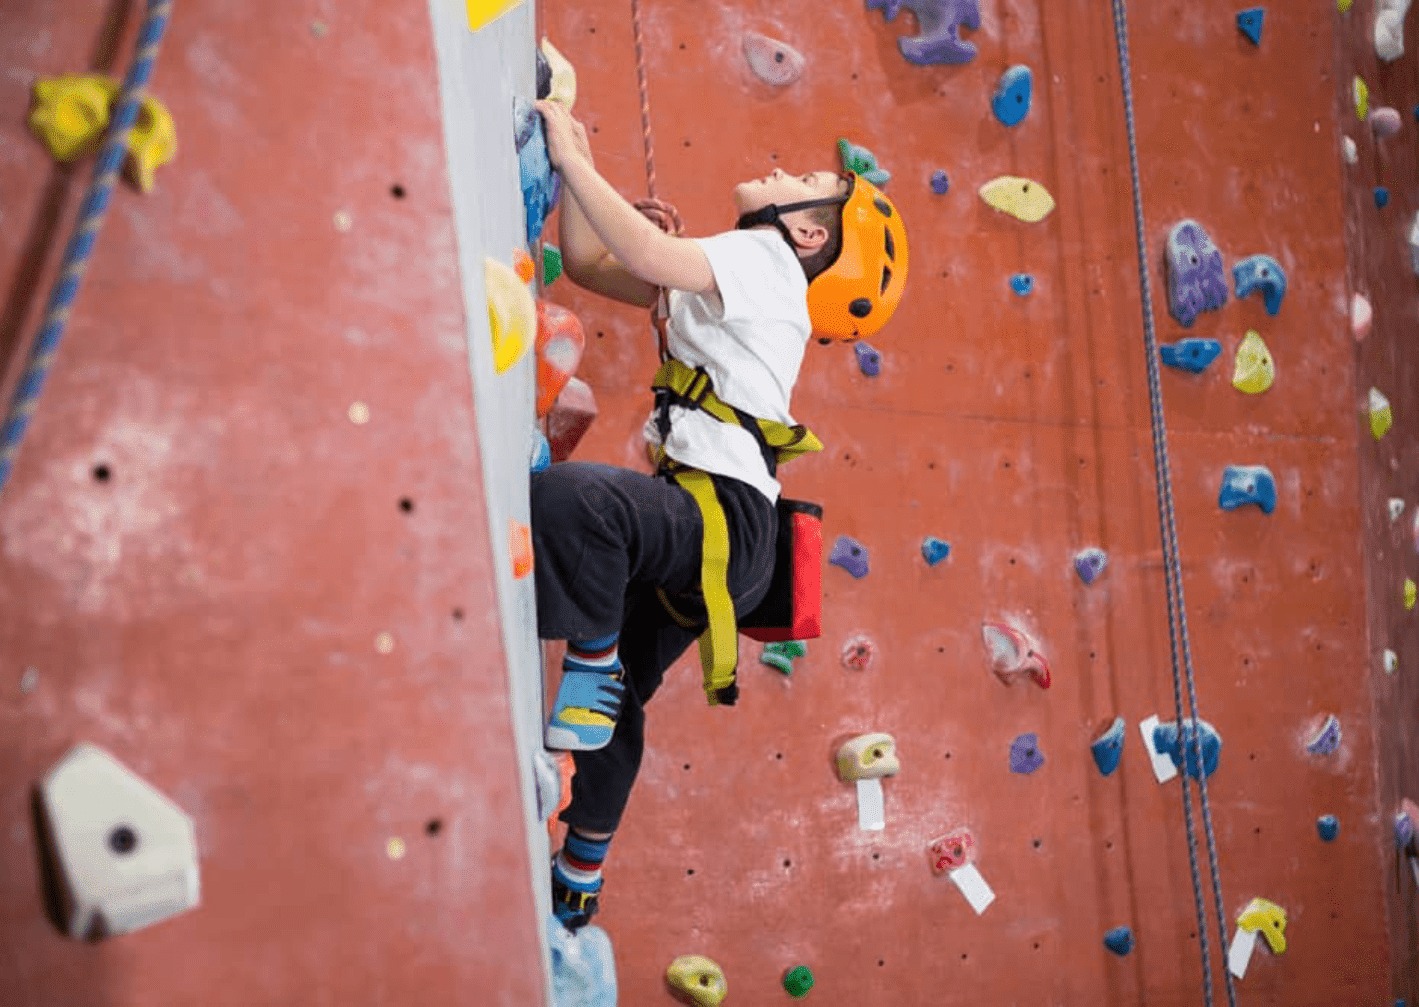 Climbing walls for kids